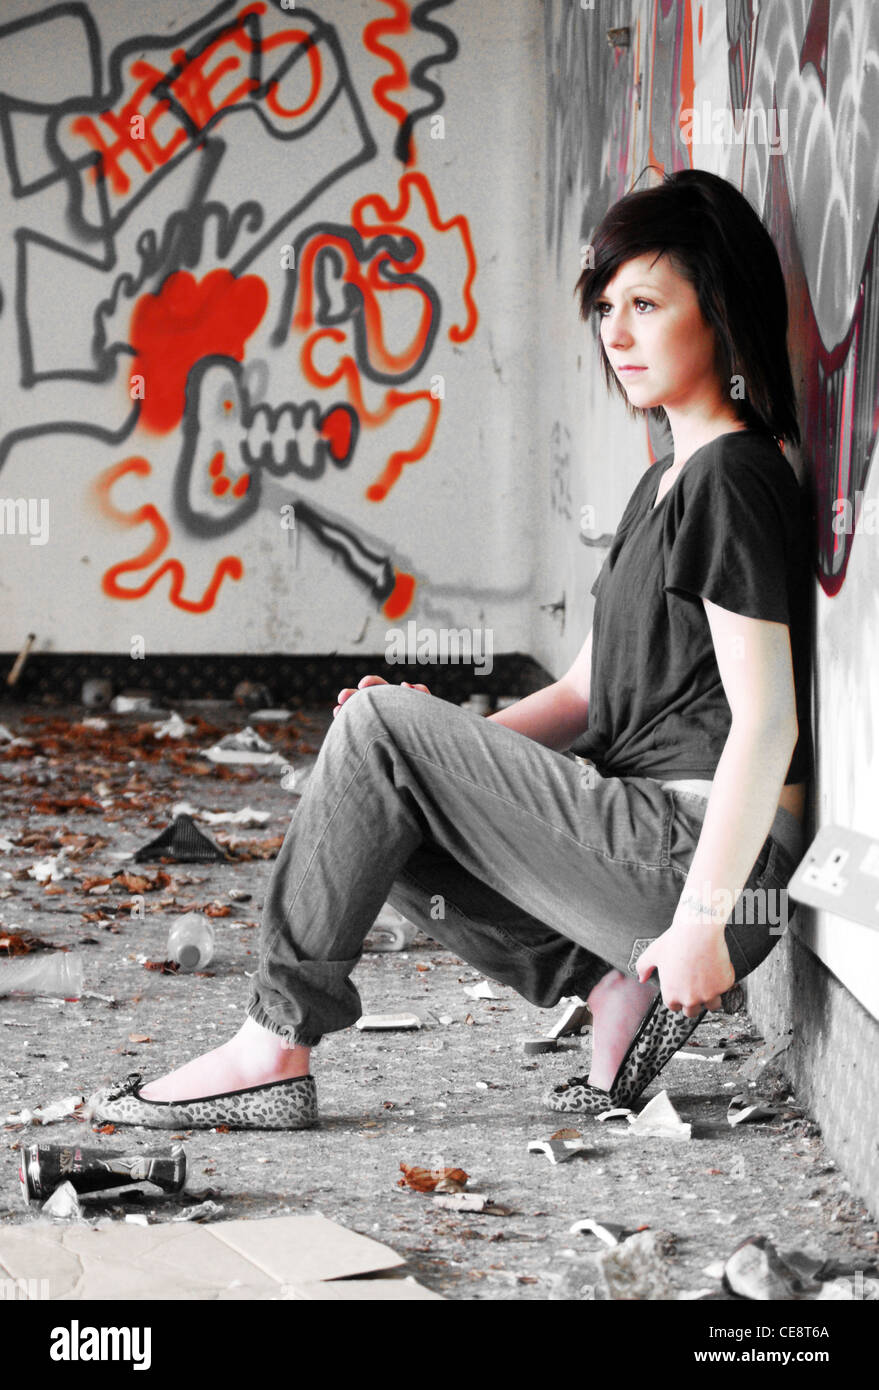 Girl modeling in abandoned building Raf base Stock Photo